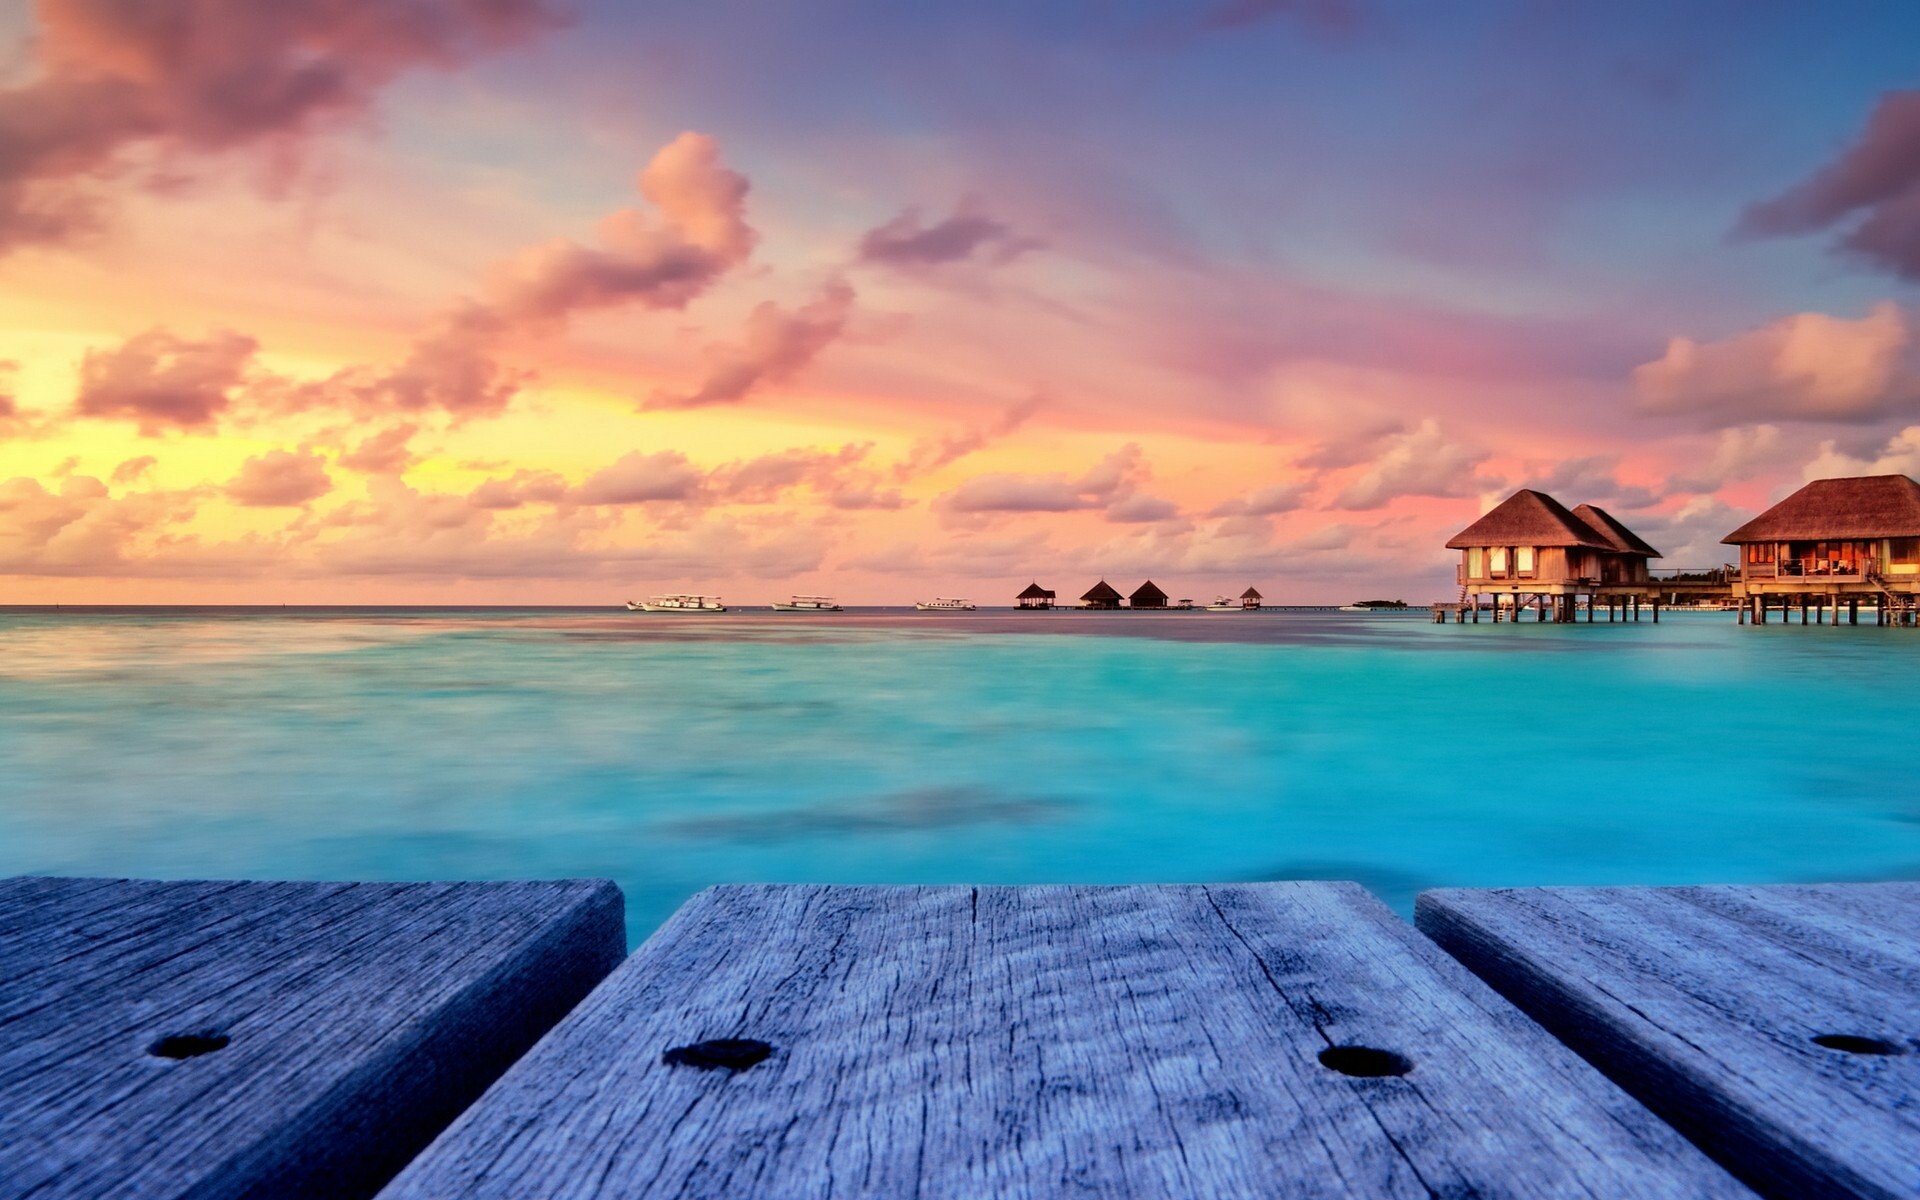 Sunset Maldives wallpaper, Inspiring colors, Relaxing atmosphere, Serene beauty, 1920x1200 HD Desktop